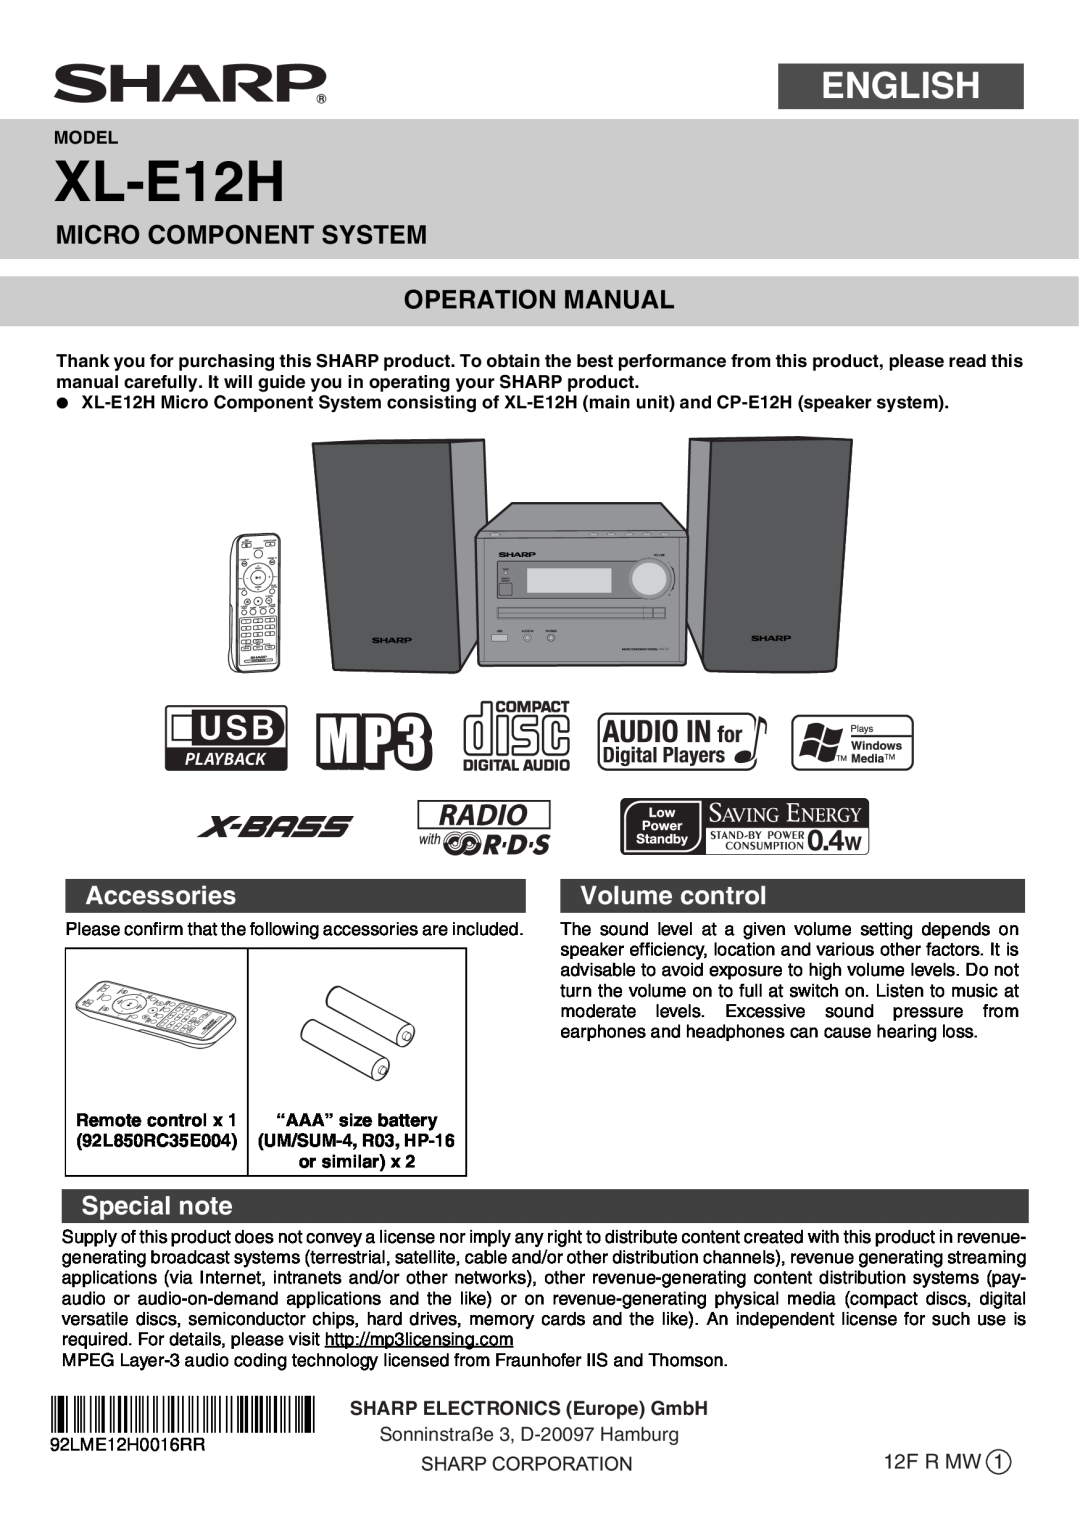 Sharp XL-E12H operation manual Accessories, Volume control, Special note, Sonninstraße 3, D-20097Hamburg, English 